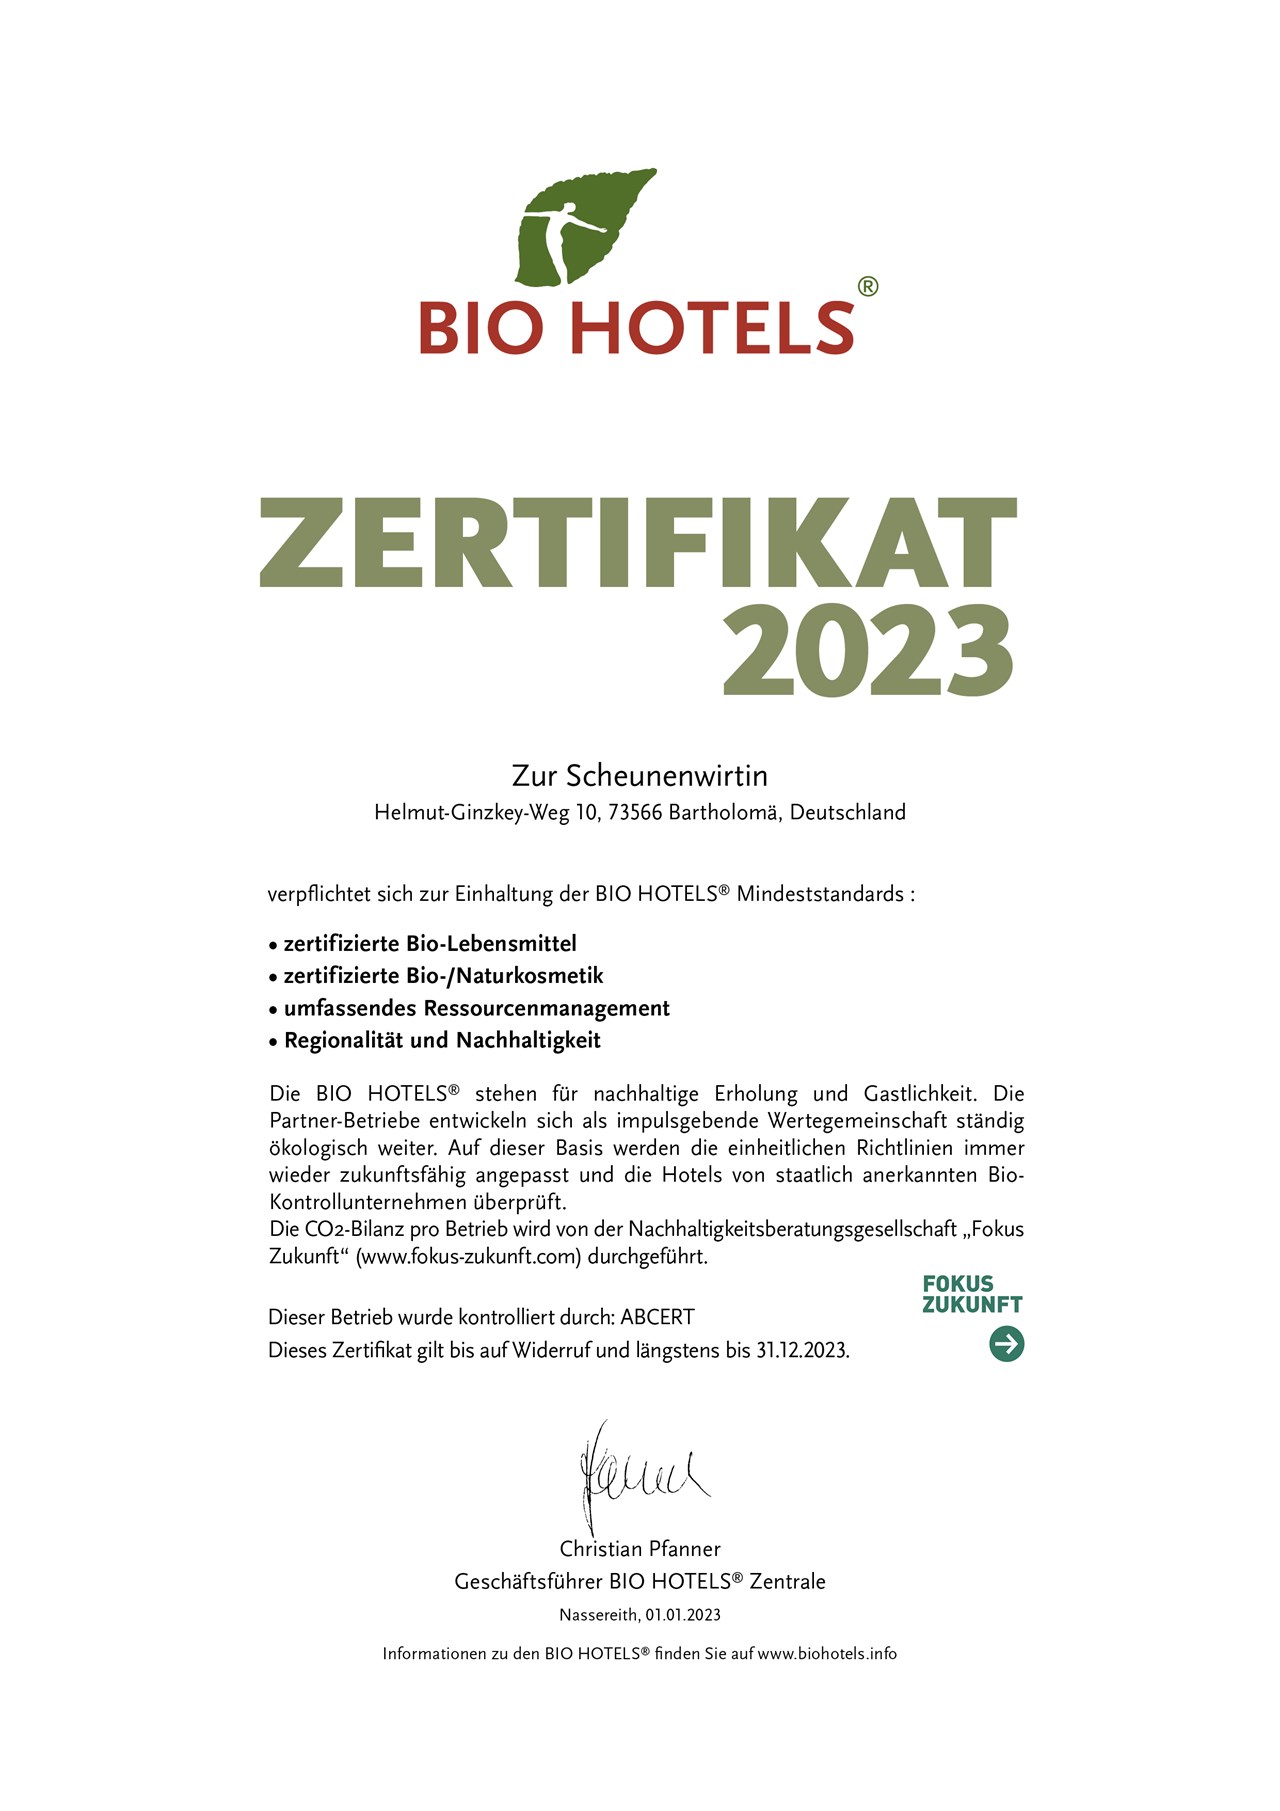 Zur Scheunenwirtin Evidence certificates BIO HOTELS® certificate